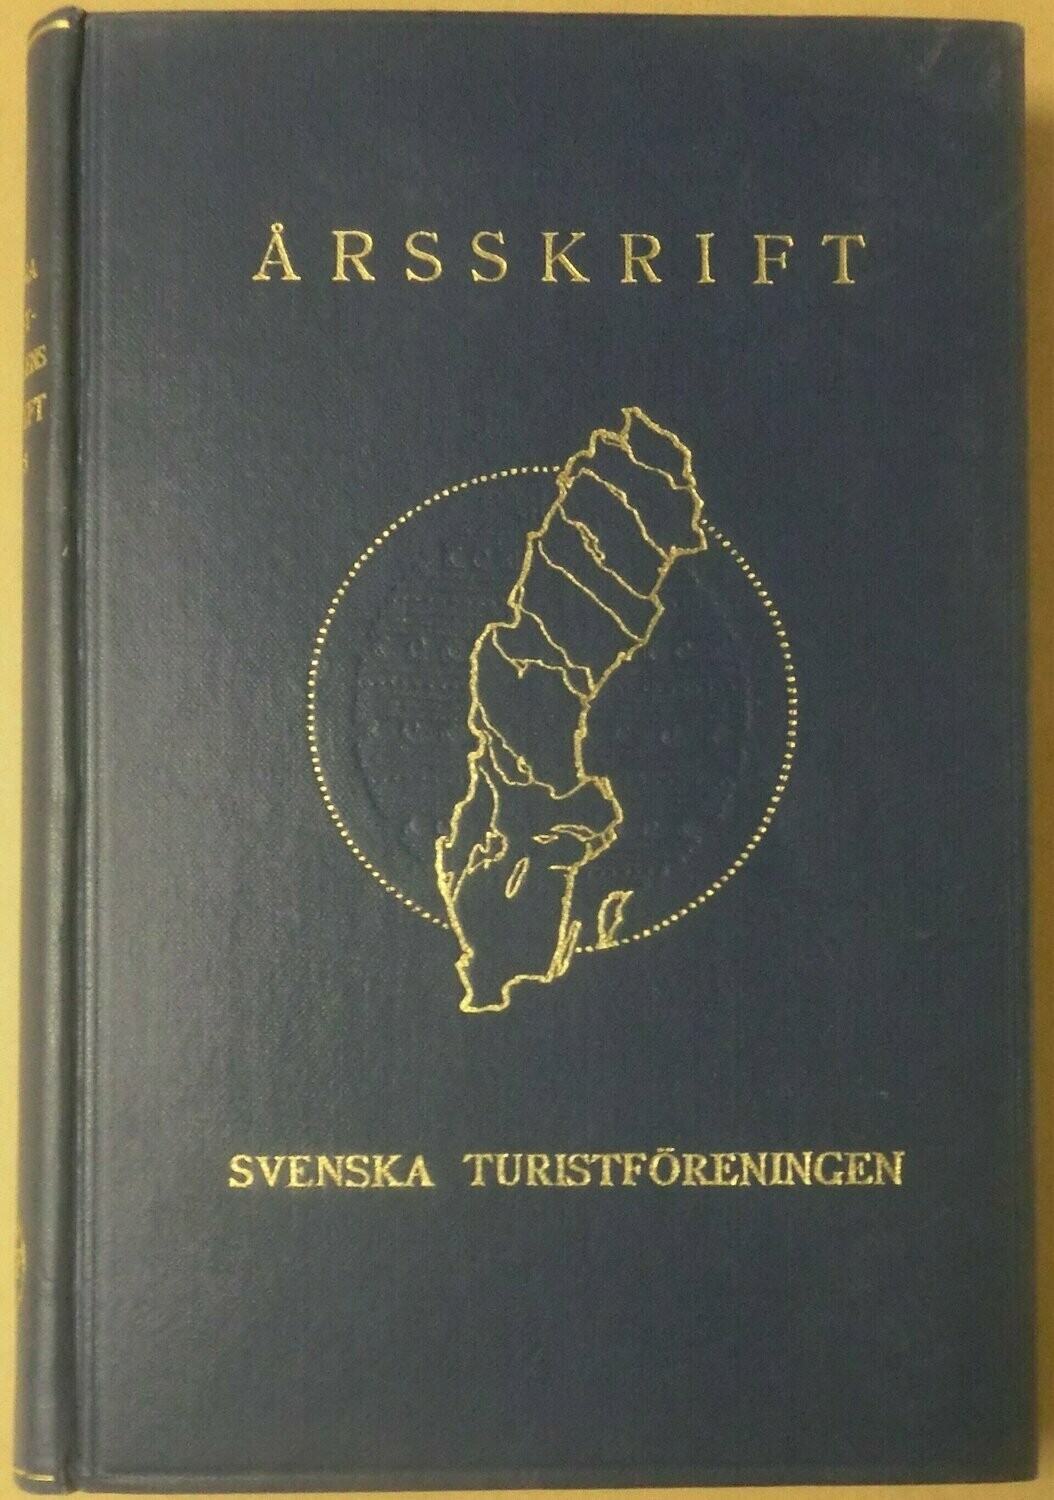 STF årsskrift 1933